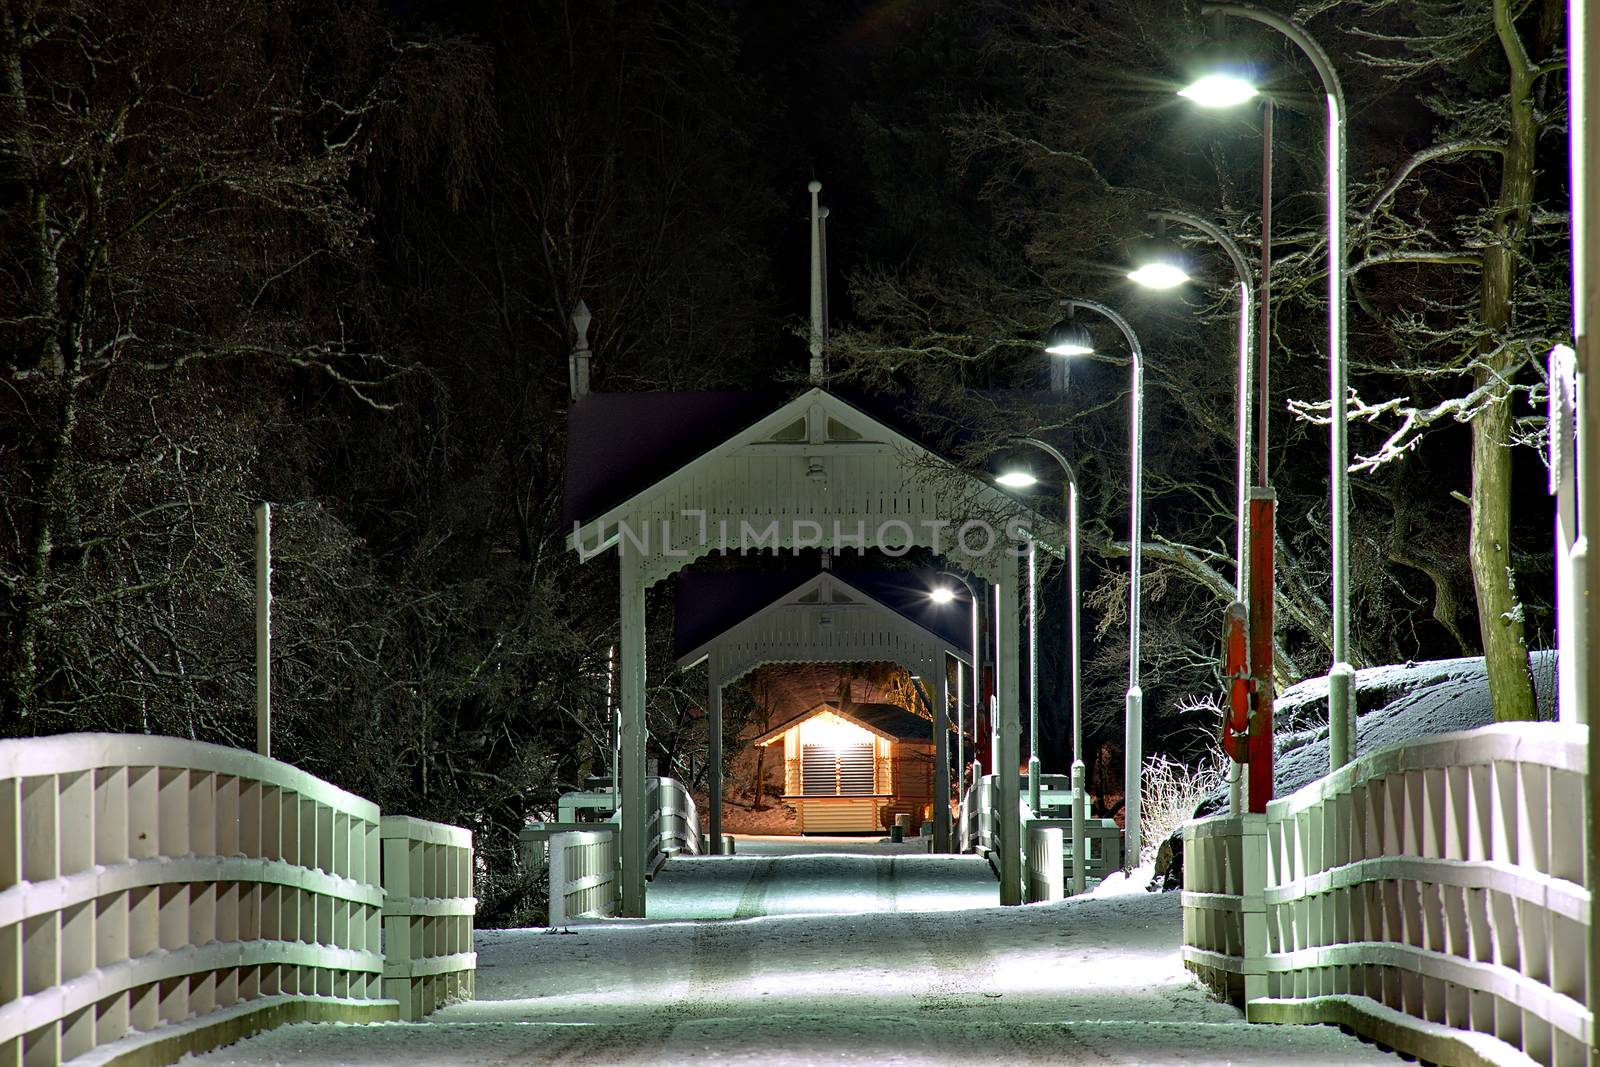 Bridge to Seurasaari in Helsinki. Lighted path photo captured in the dark at night.